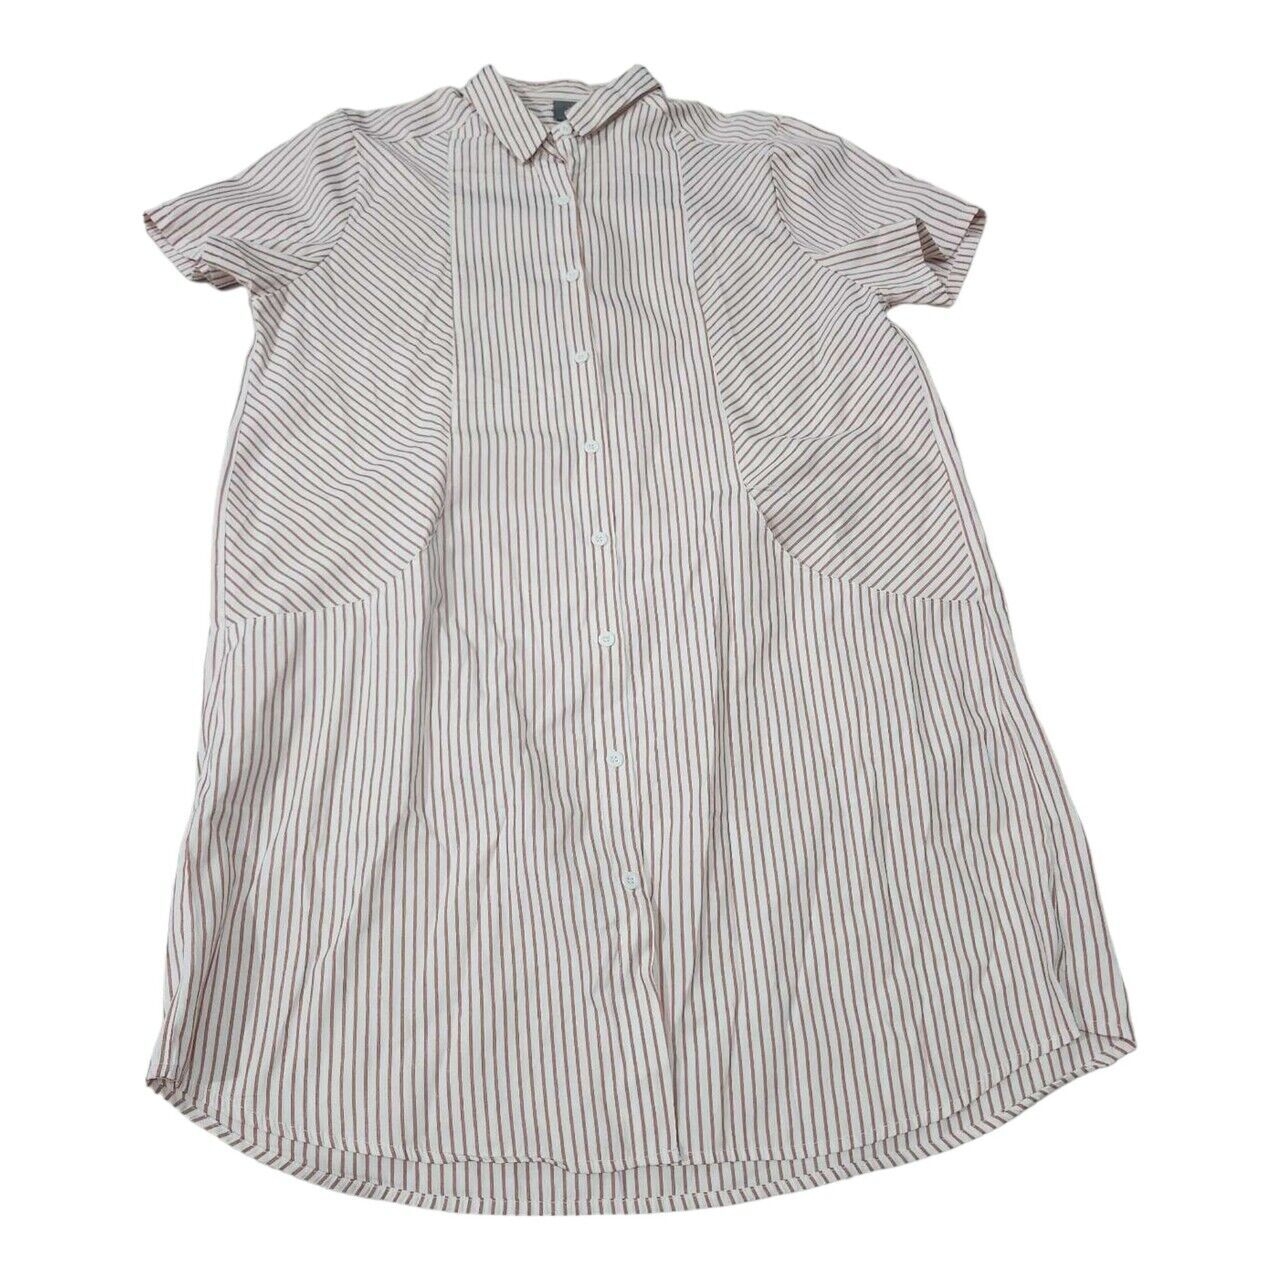 This is April White & Terracota Stripes Mini Dress